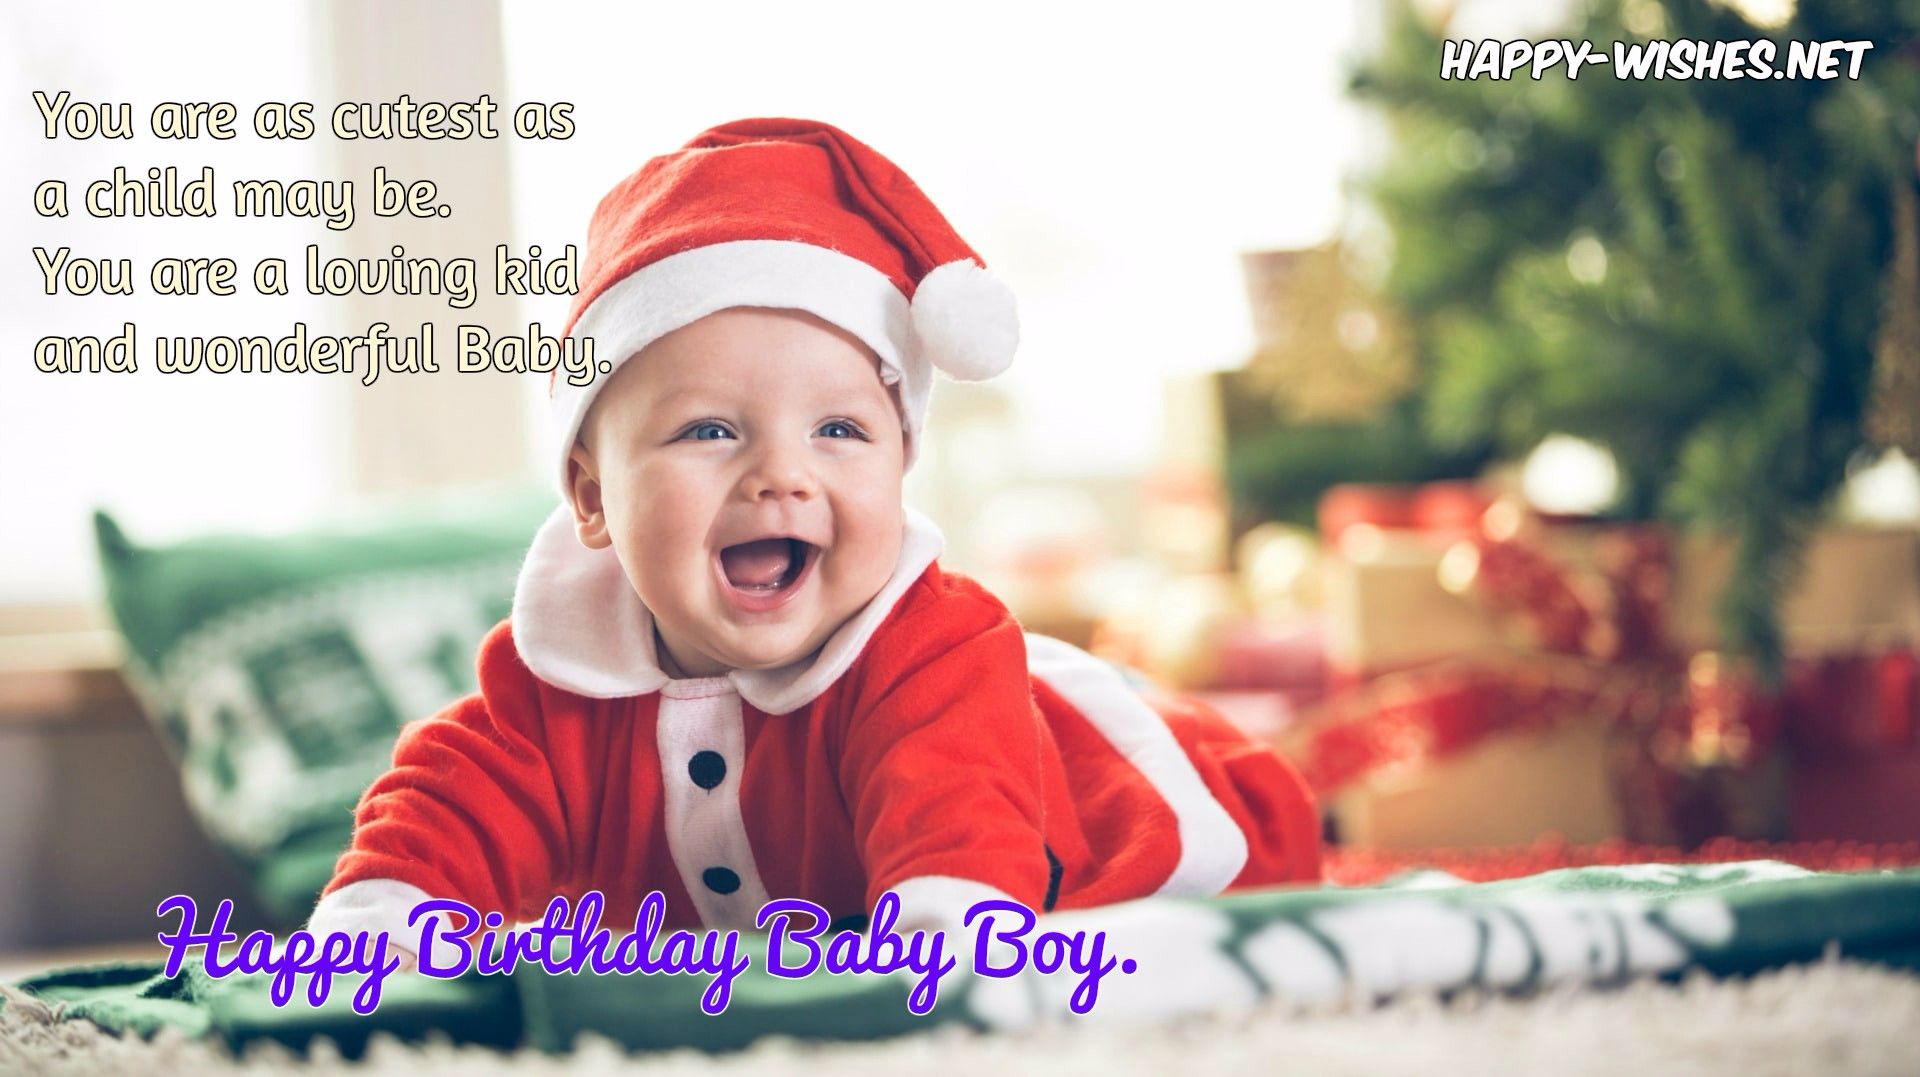 40+ Happy Birthday Wishes For Baby Boy